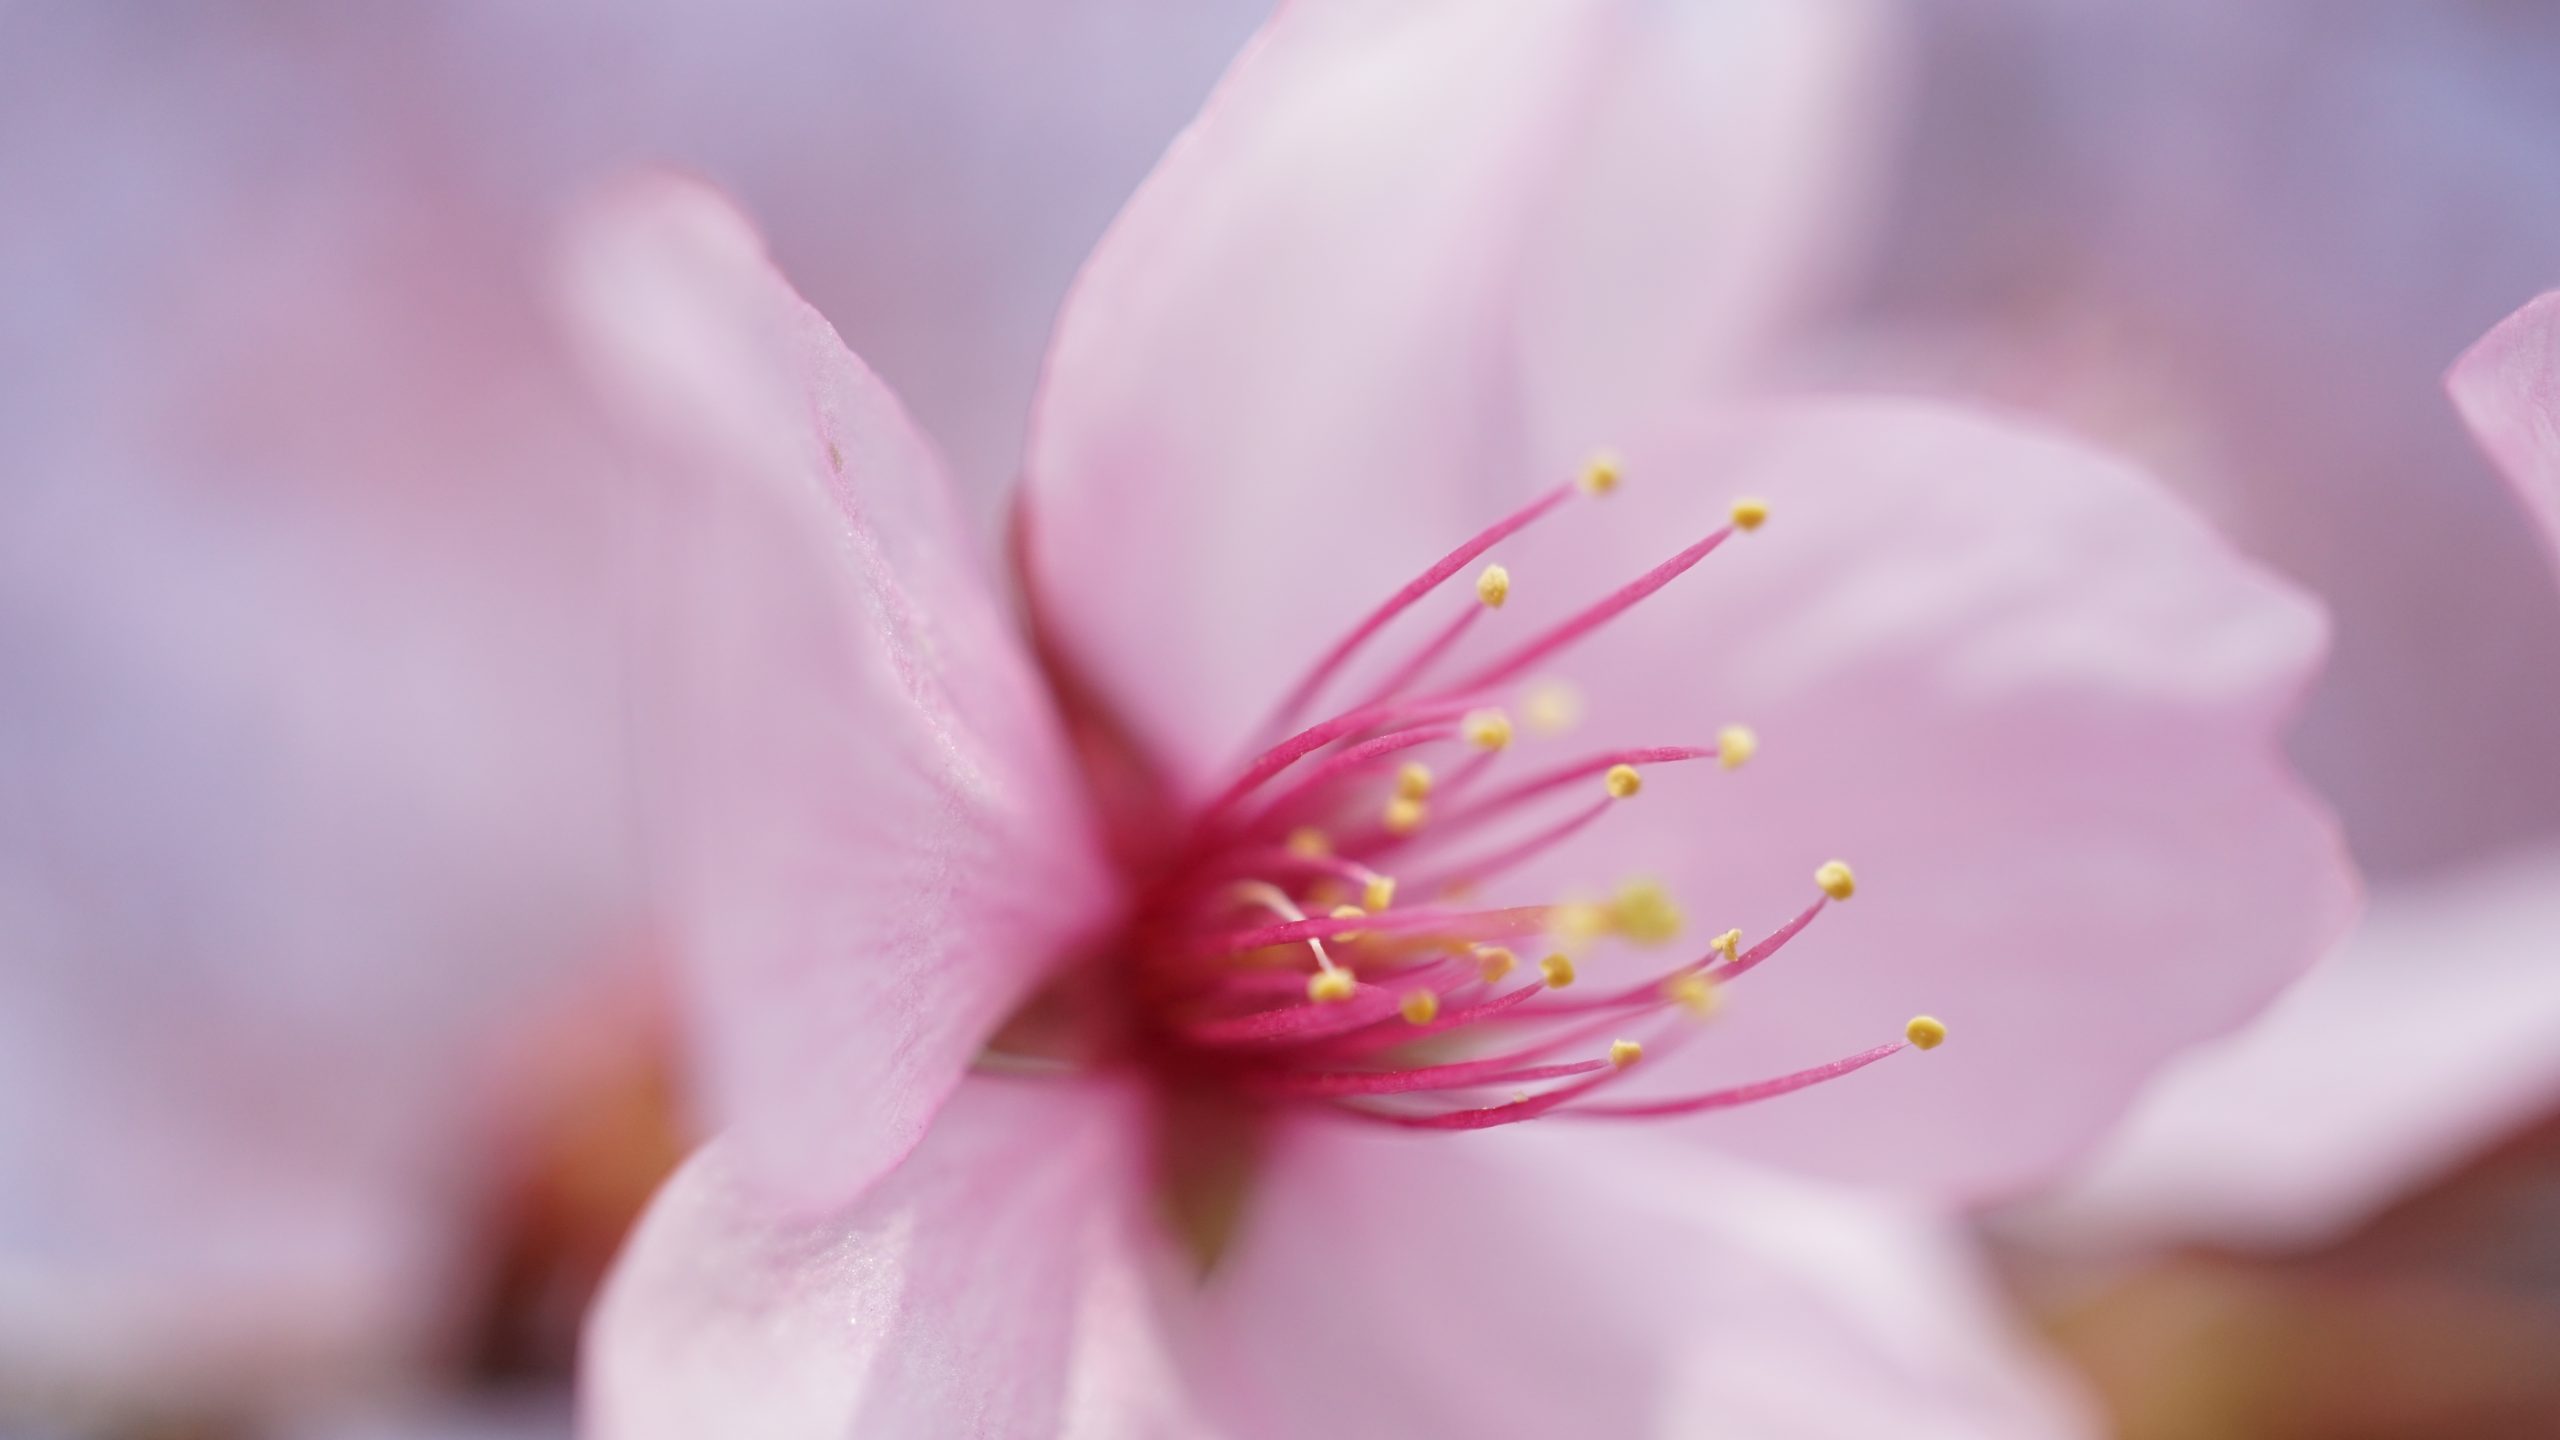 A closeup shot of a pink flower with stamens. Depositphotos.